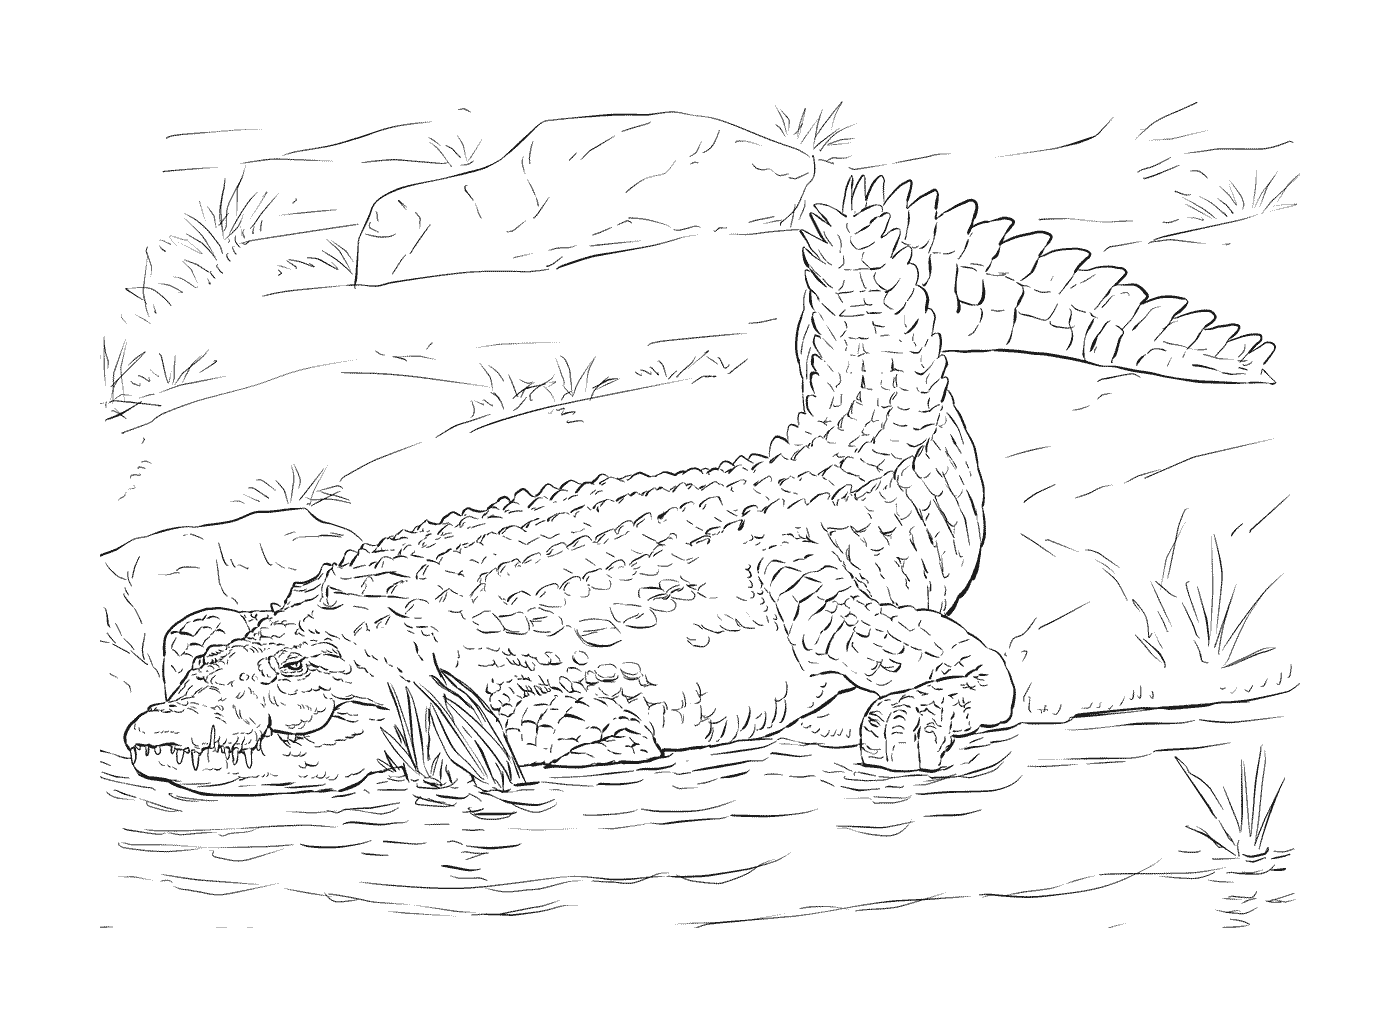   Un adulte de crocodile du Nil dans son habitat naturel 